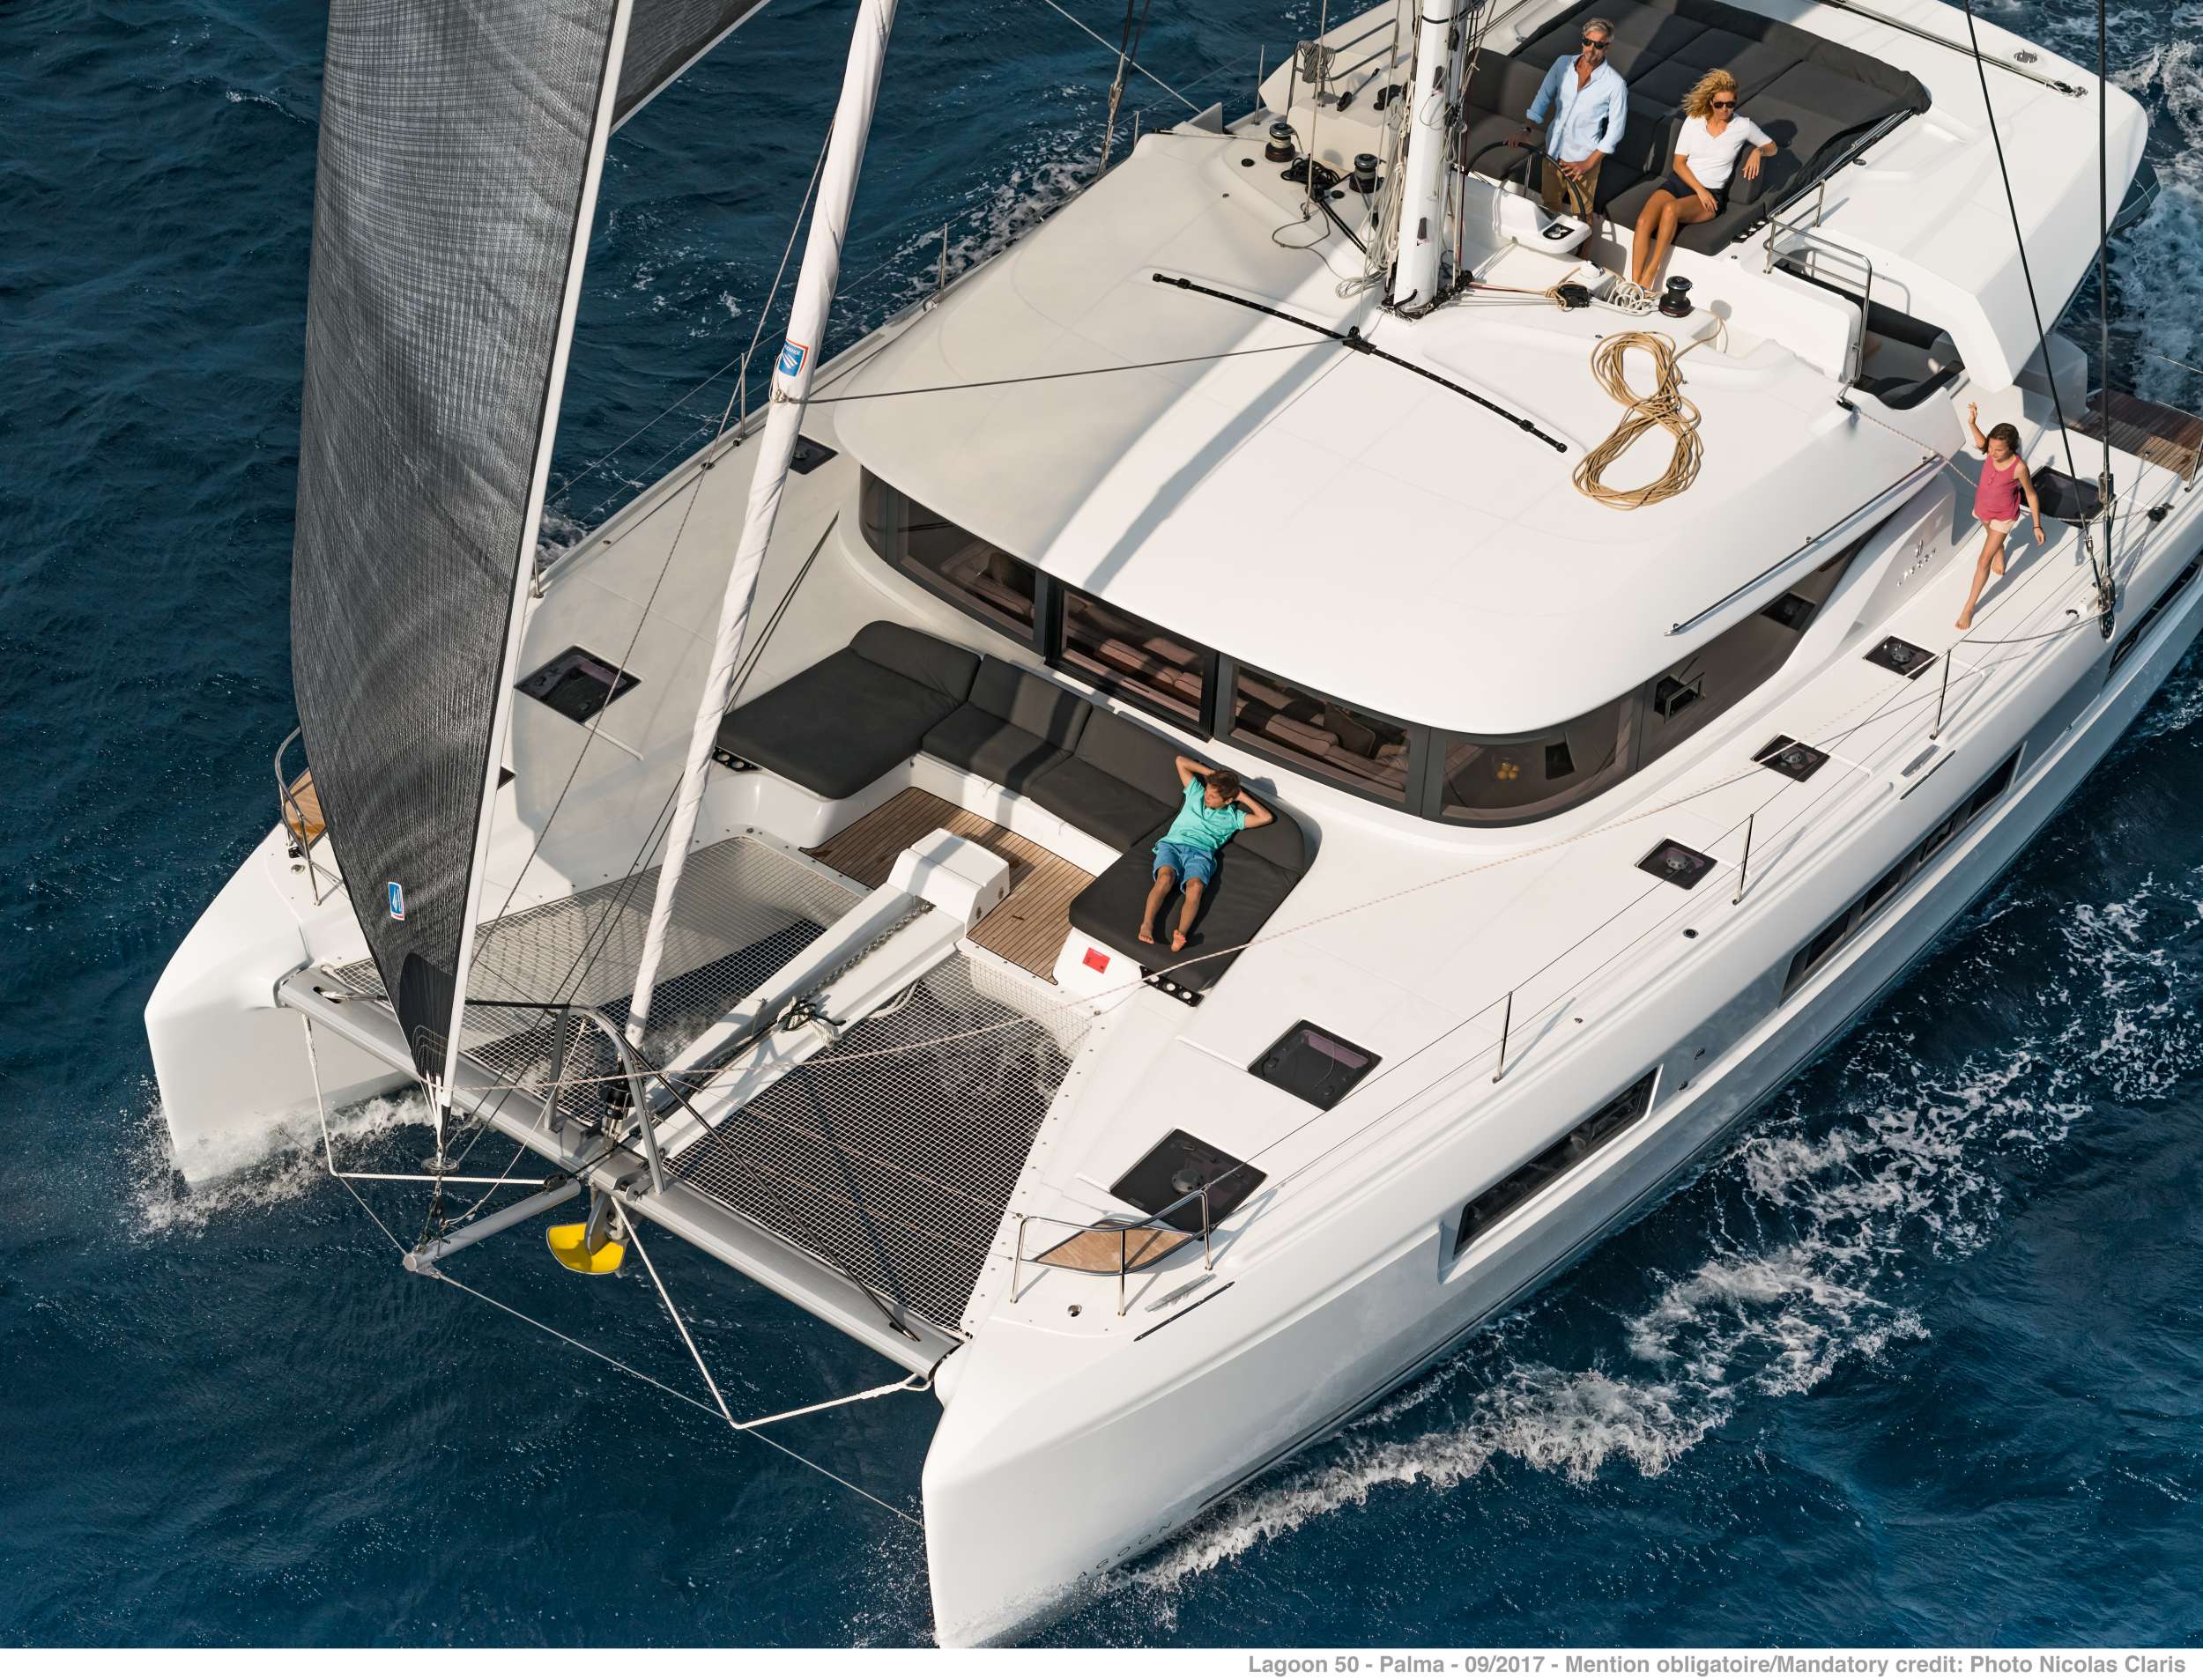 ONEIDA 2 - Yacht Charter Sami & Boat hire in Greece 6